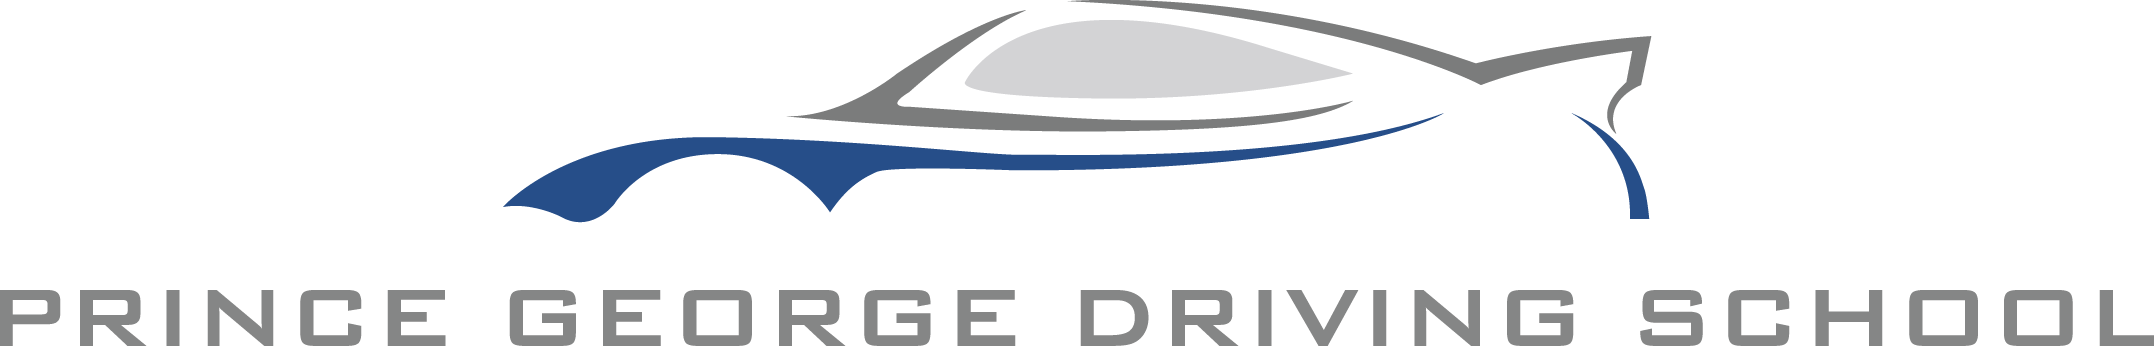 Prince George Driving School (2154x346)